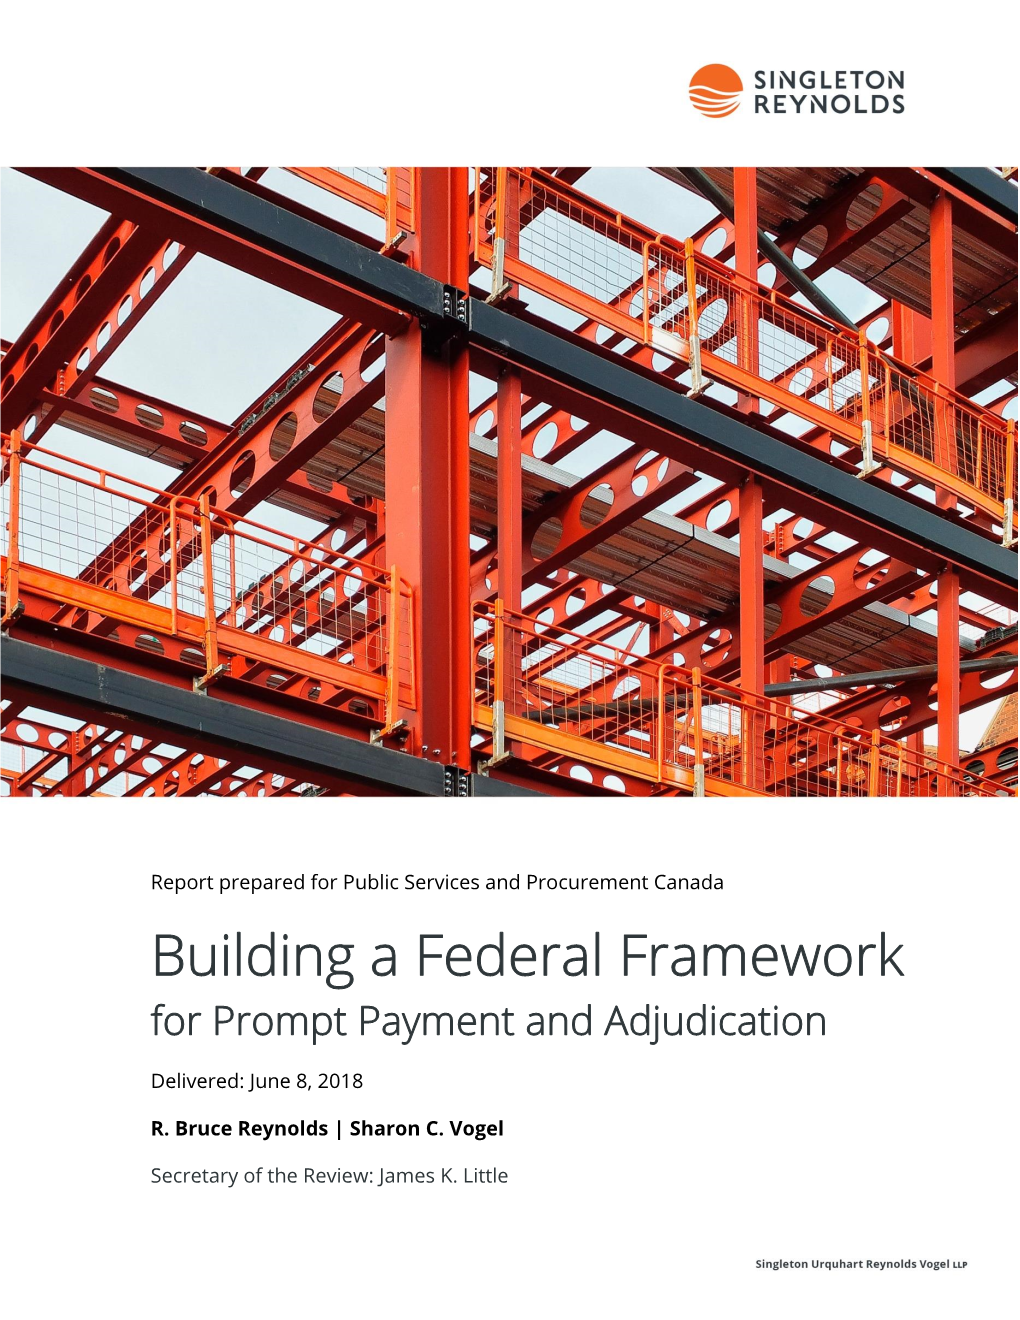 Building a Federal Framework for Prompt Payment and Adjudication